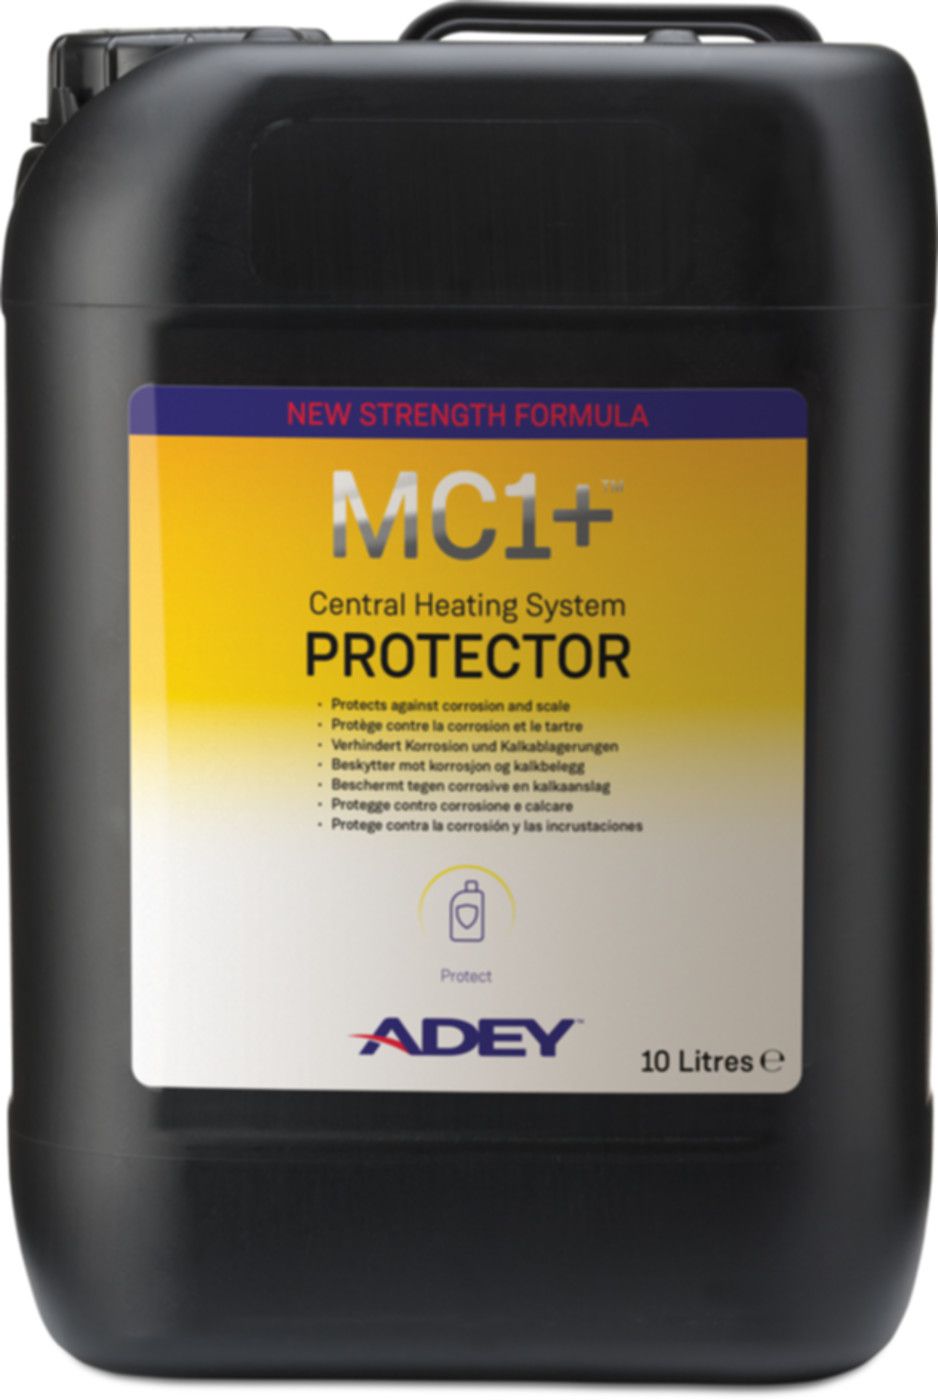 Heizungsschutzmittel ADEY Protector MC1+ 5 l Kanister - Heizungswasseraufbereitung